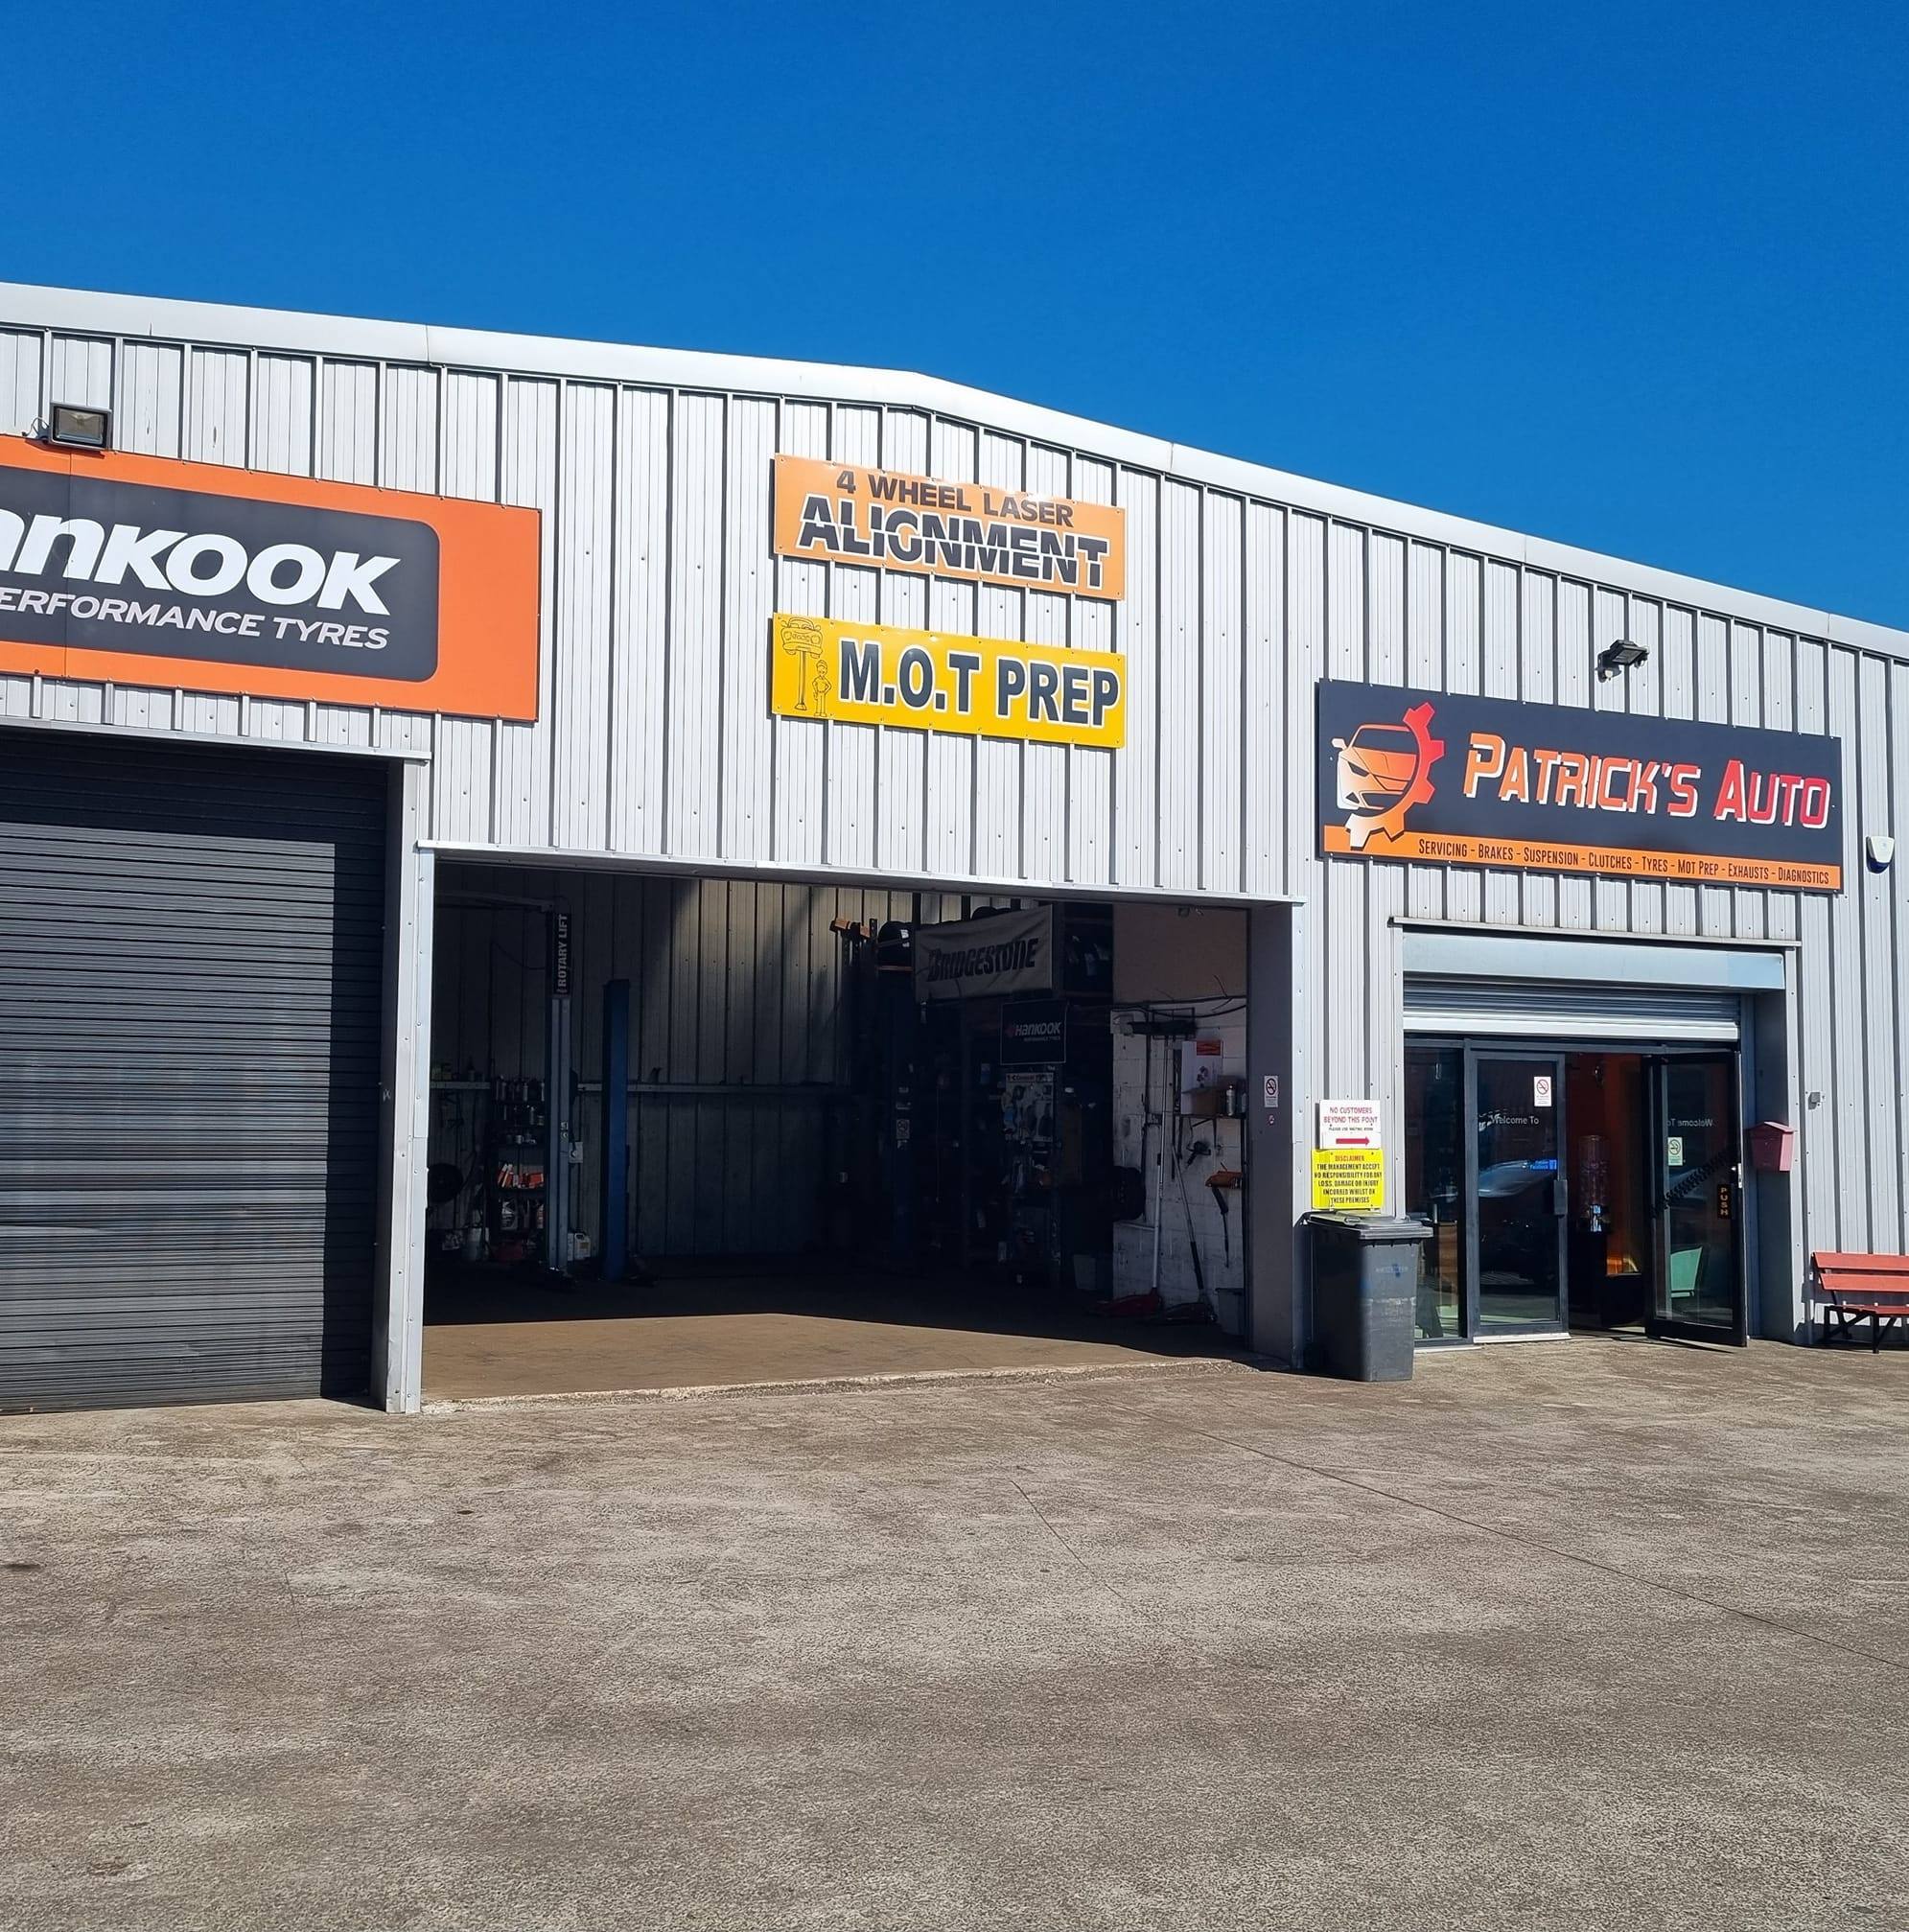 Patrick's Auto Ltd Garage